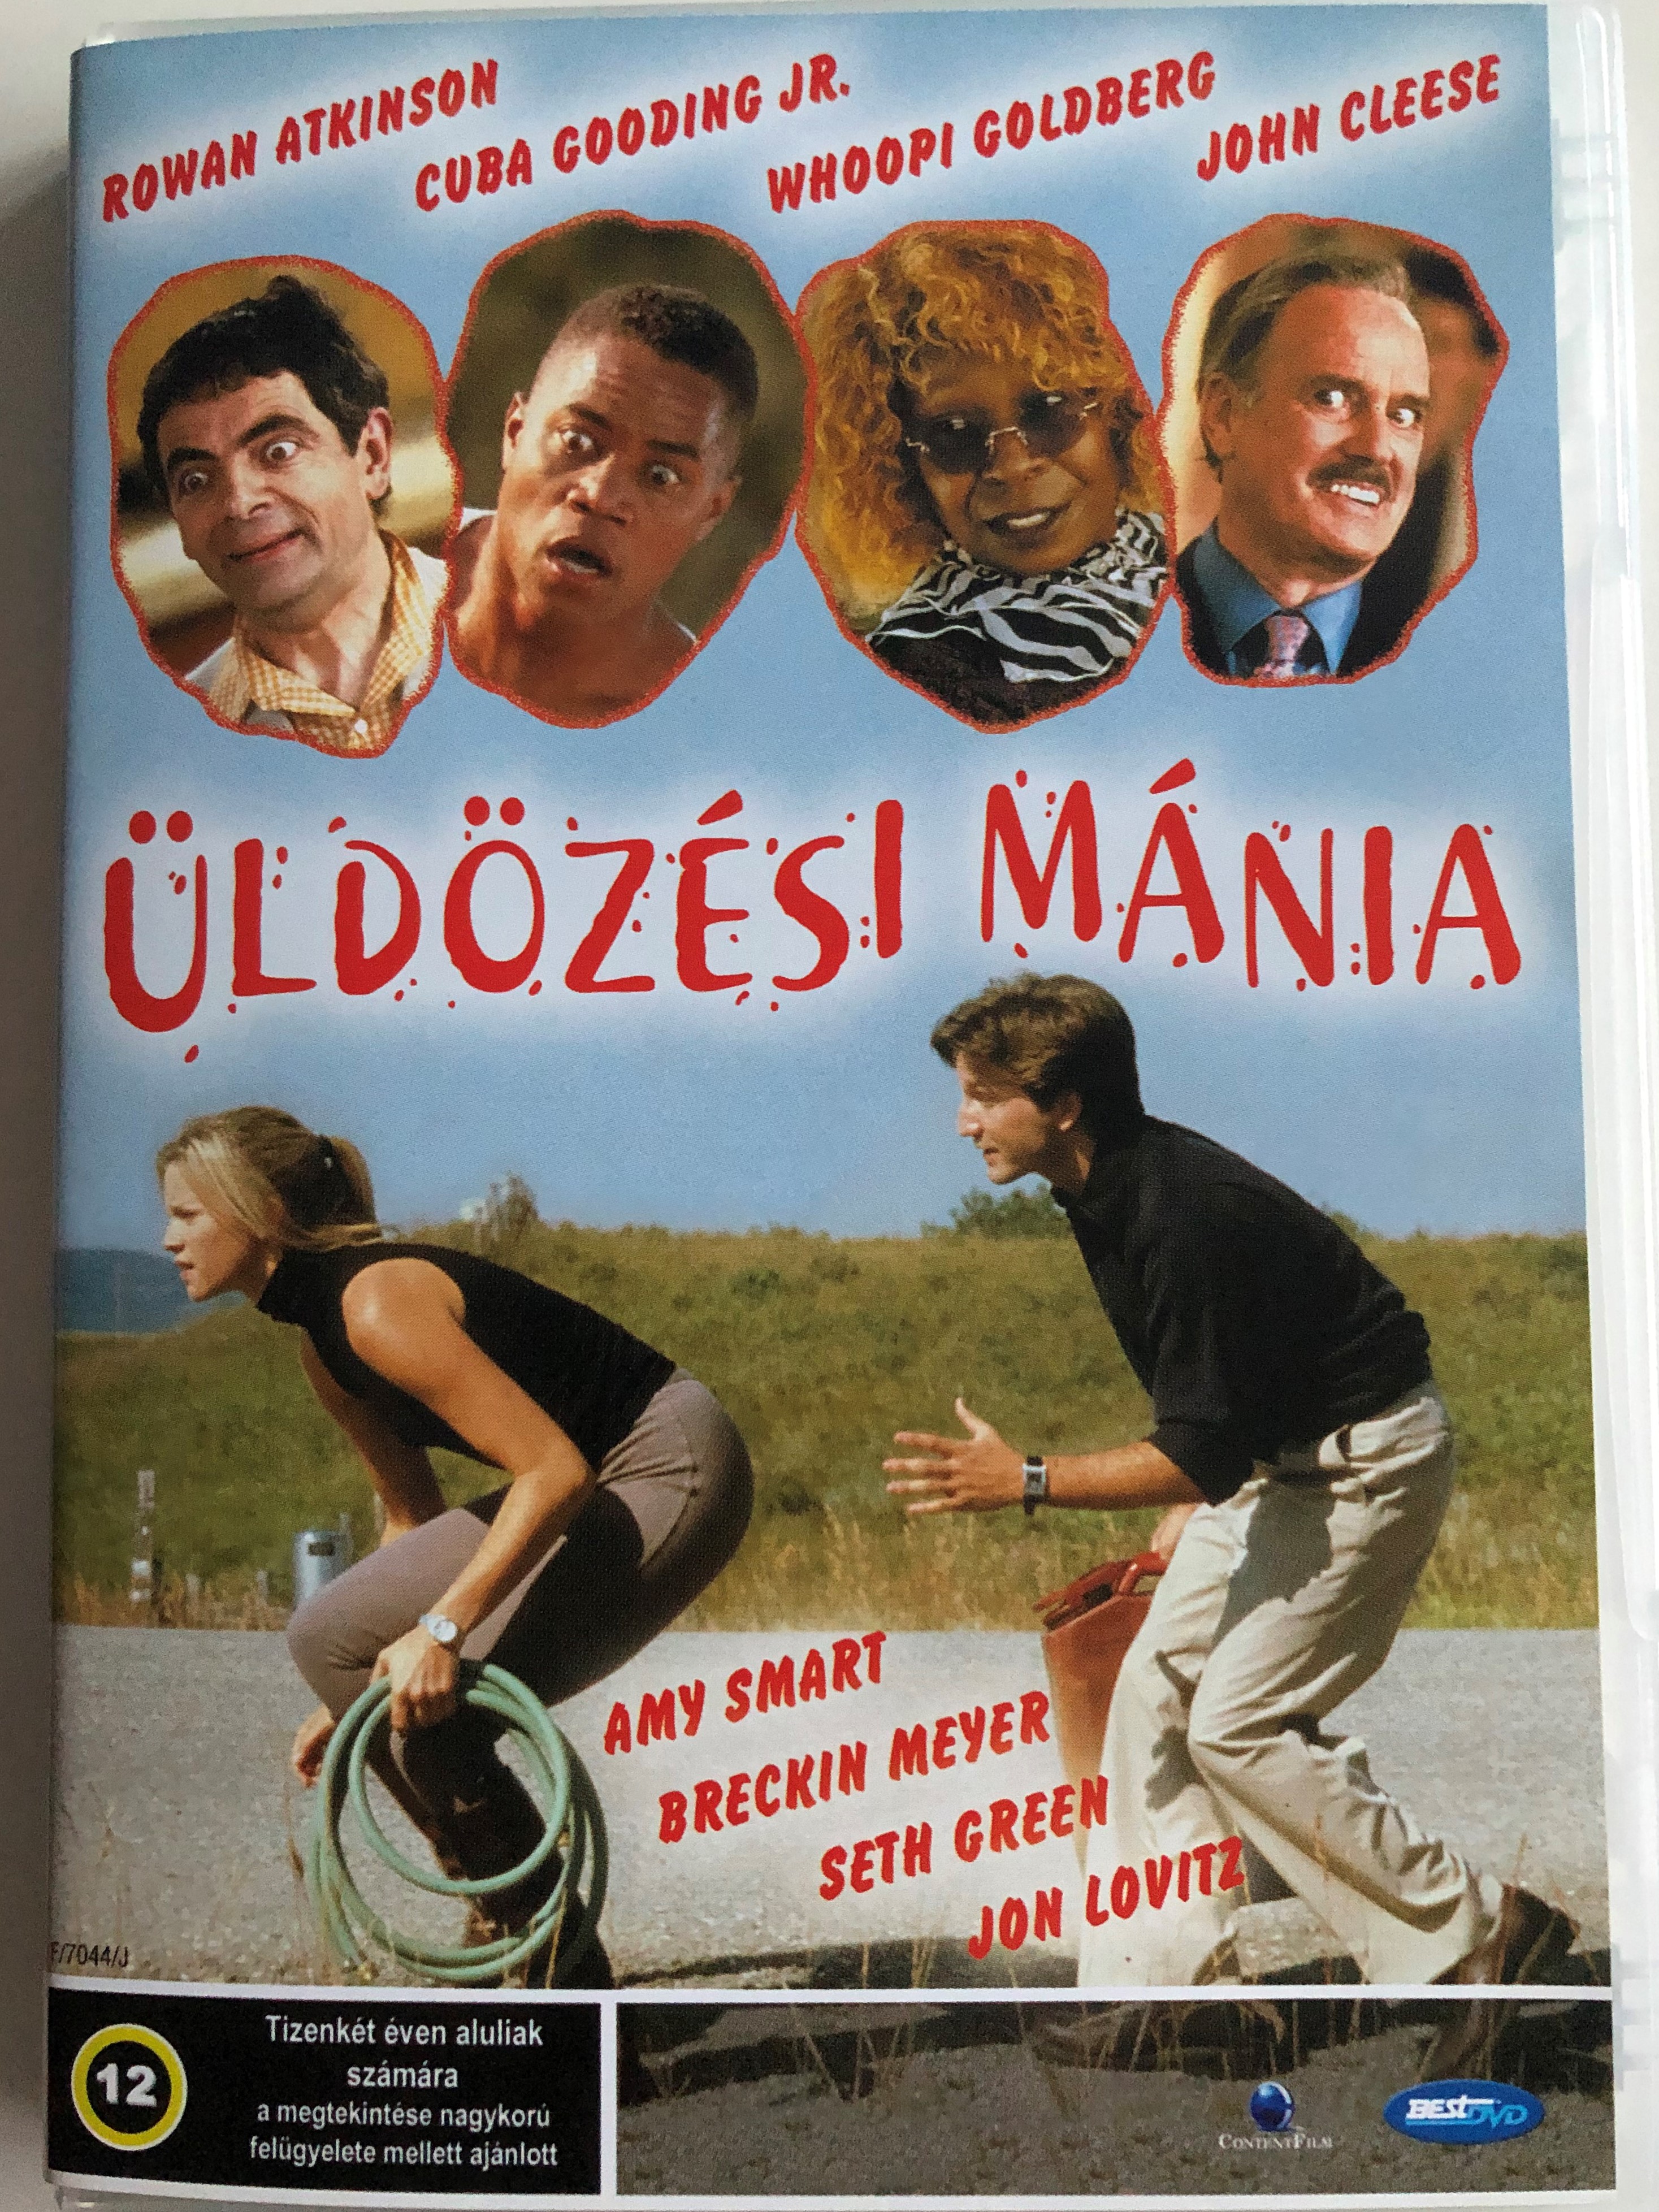 rat-race-dvd-2001-ld-z-si-m-nia-directed-by-jerry-zucker-1.jpg